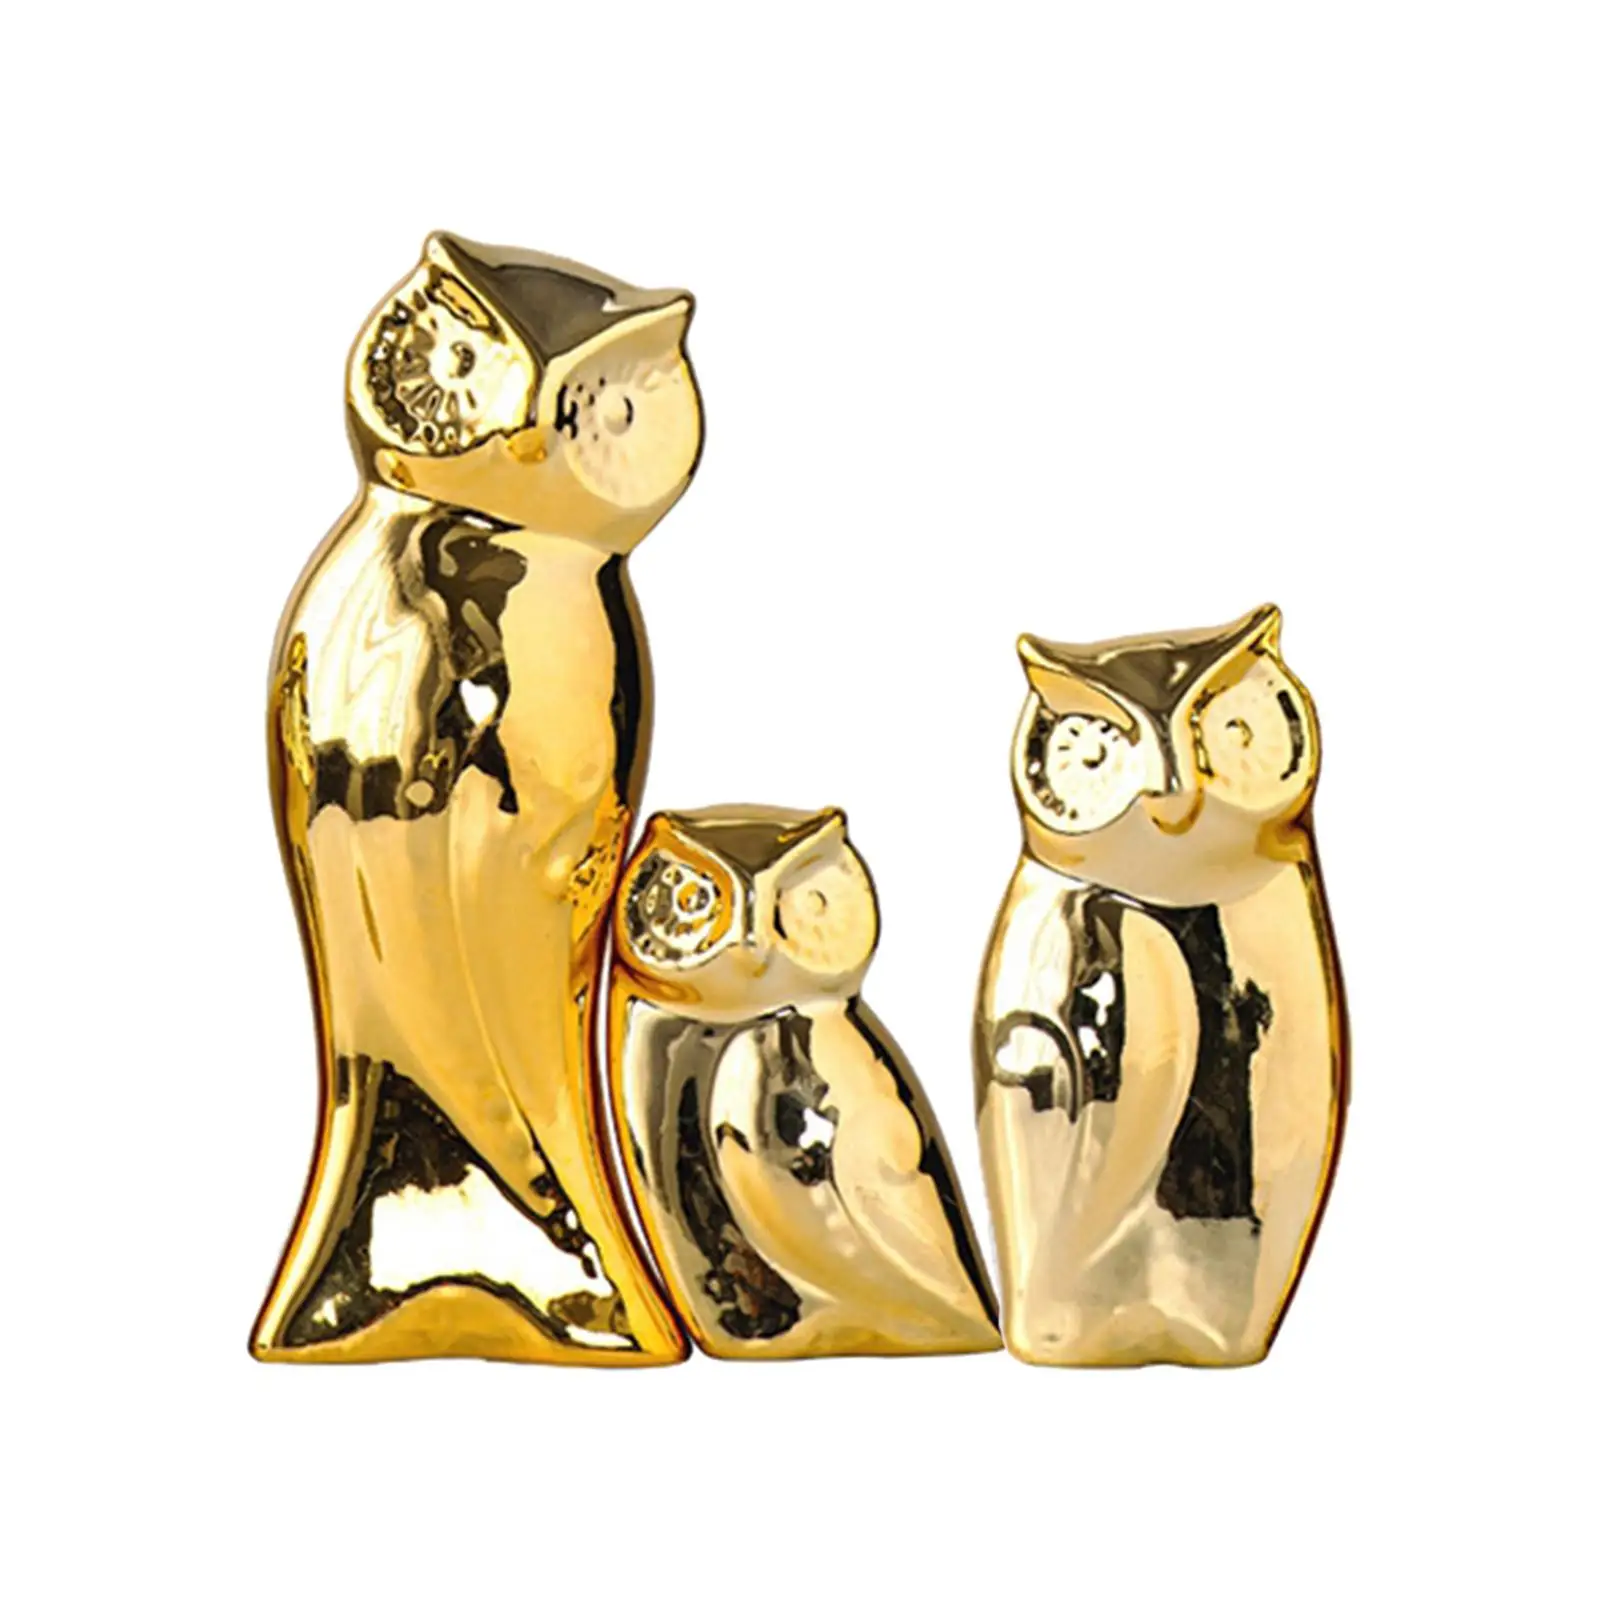 

3 Pieces Golden Owl Statues Ceramic Crafts Nordic Owl Figurines Desk Ornaments for Study Office Bookshelf Living Room Decoration